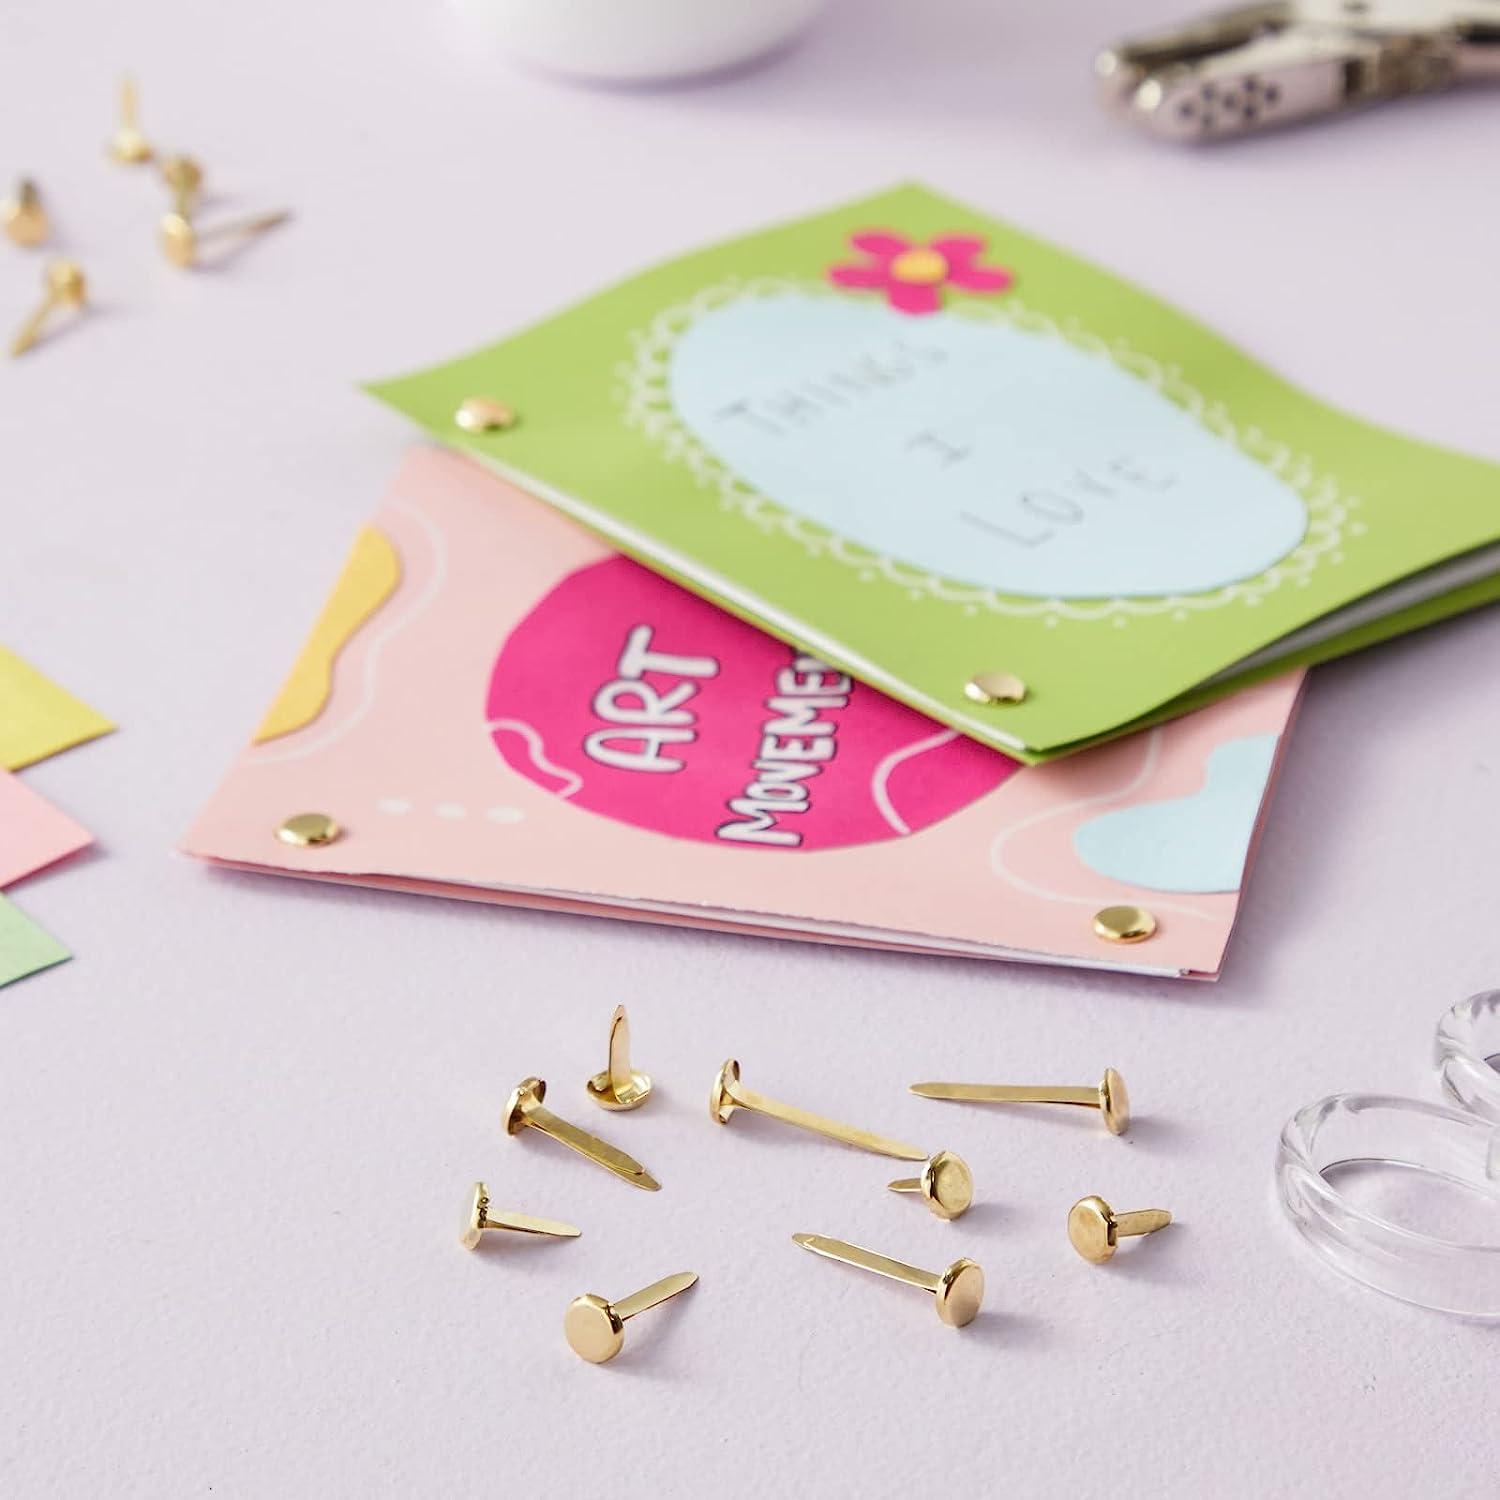 Mini Metal Brads Paper Fasteners Assorted Colors Split Craft Pins